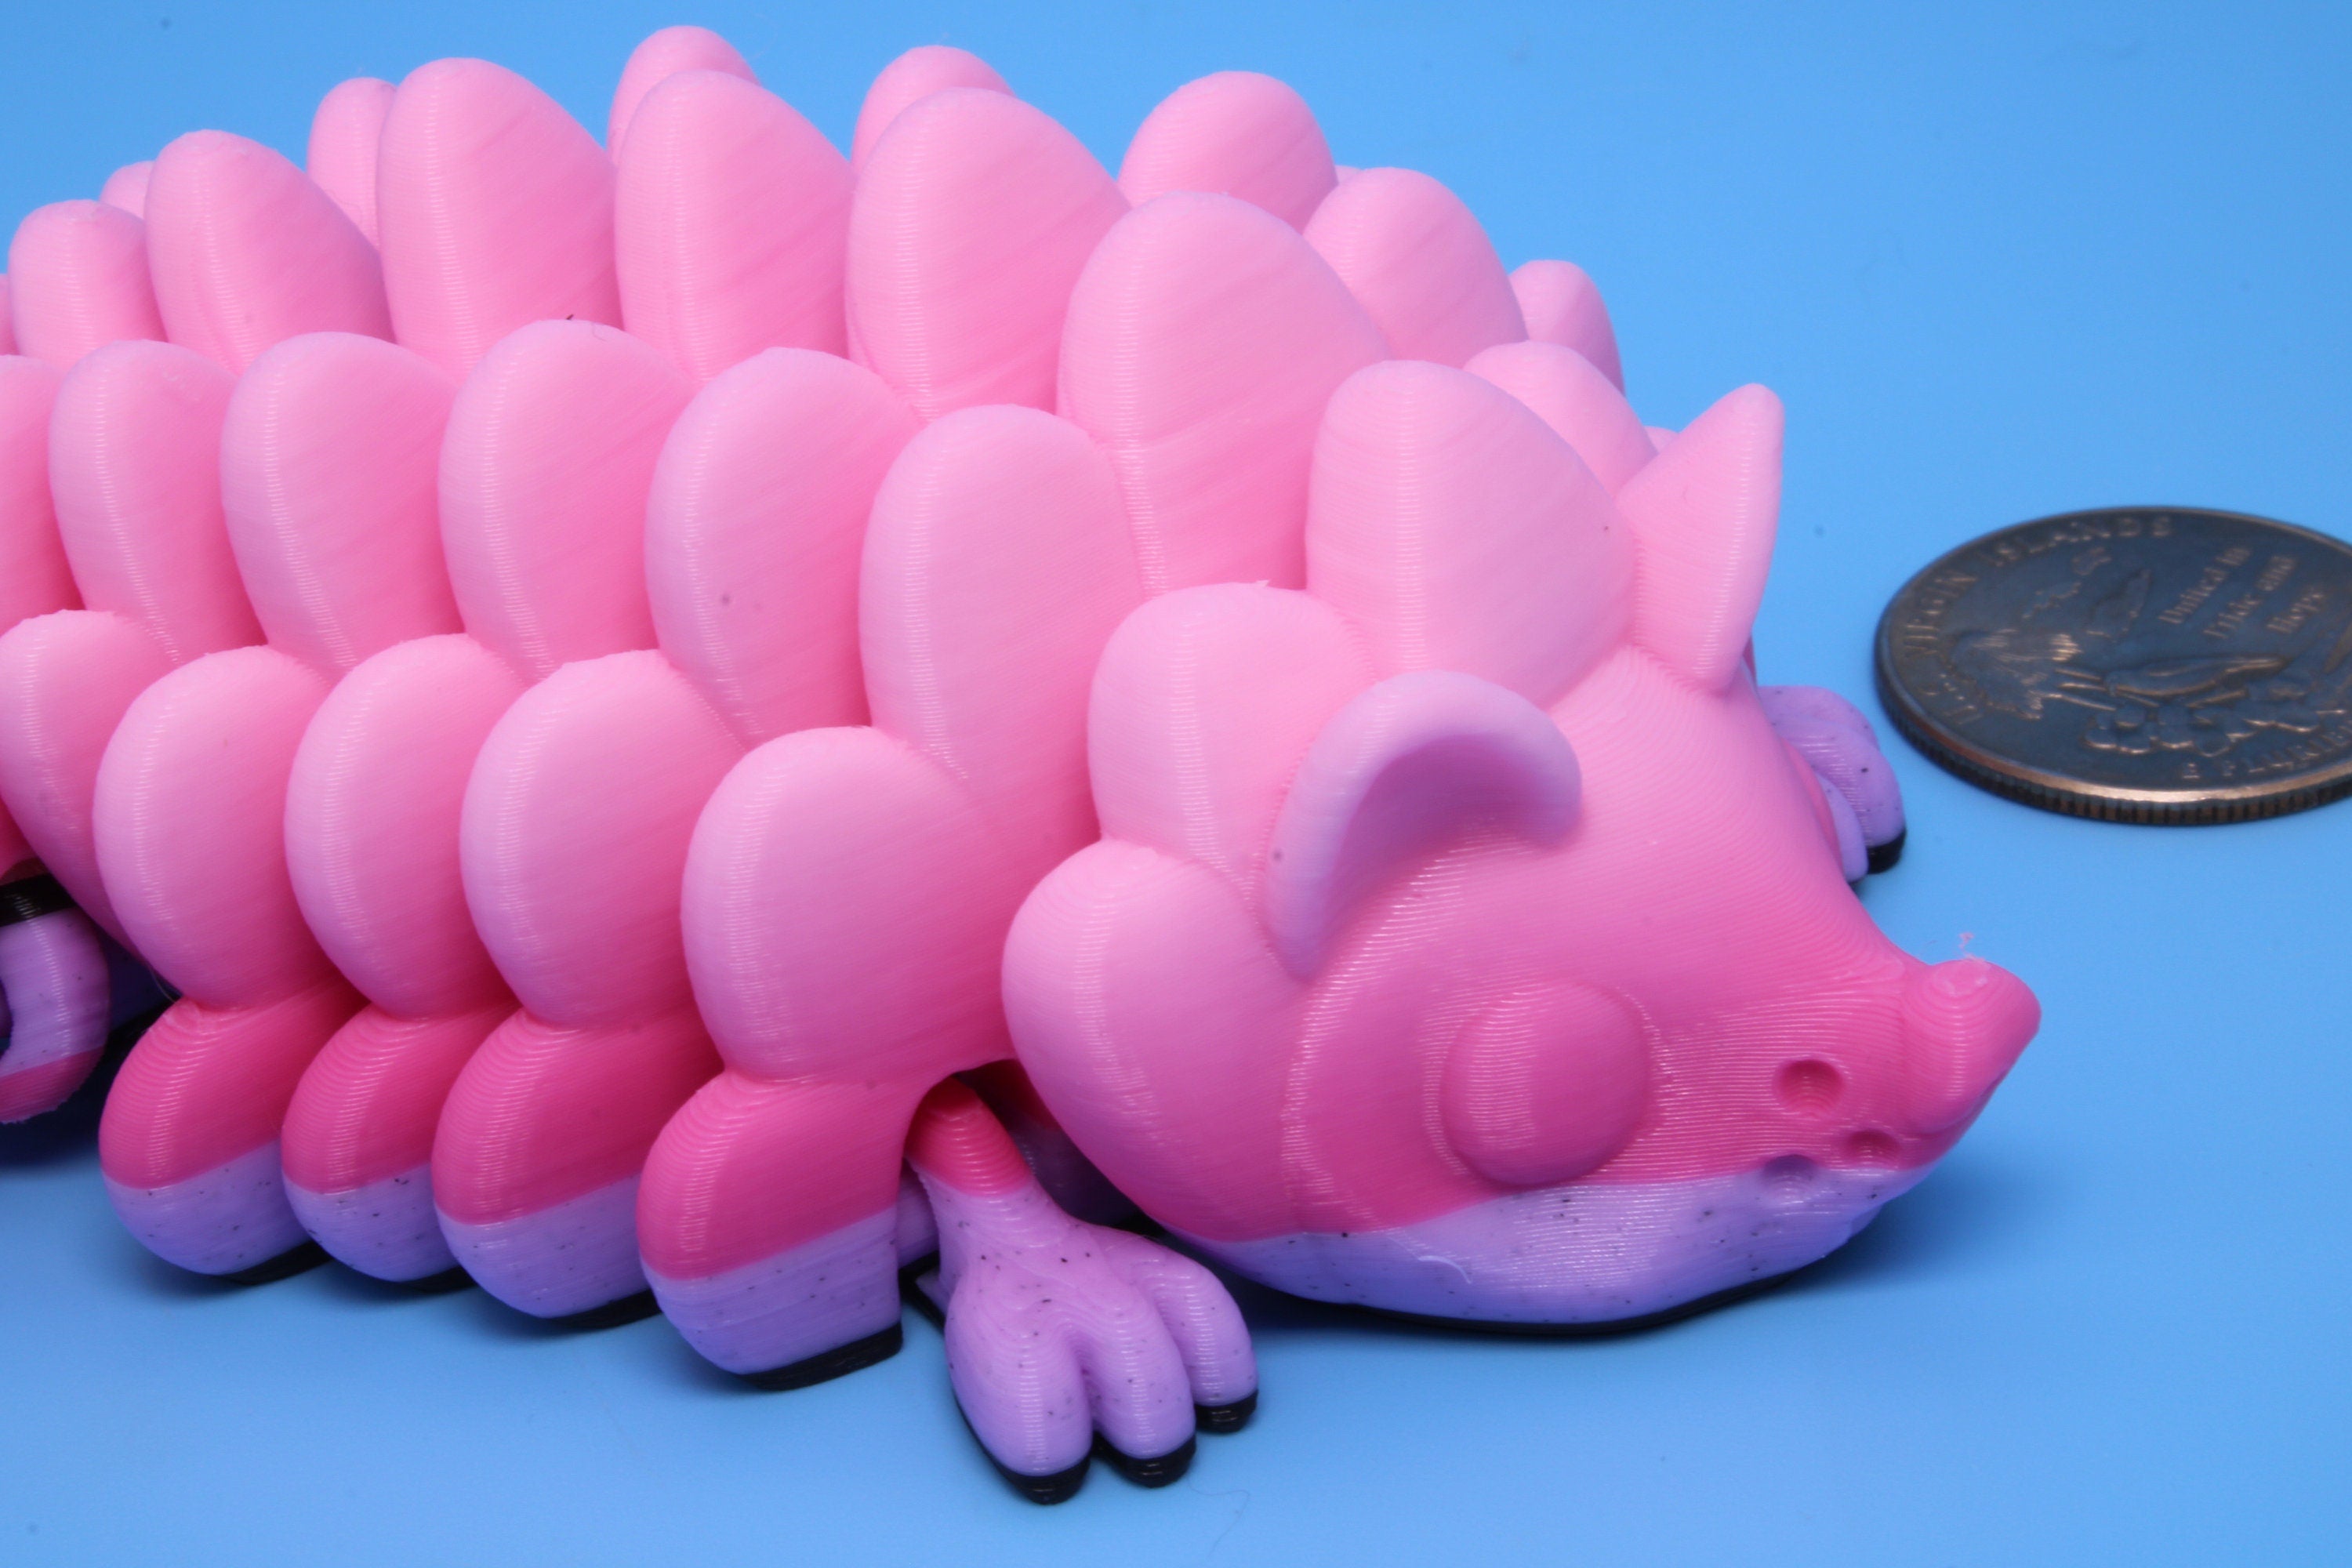 Hedgehog | 3D Printed | Small Cute Hedgehog | Sensory Toy | Fidget Toy.